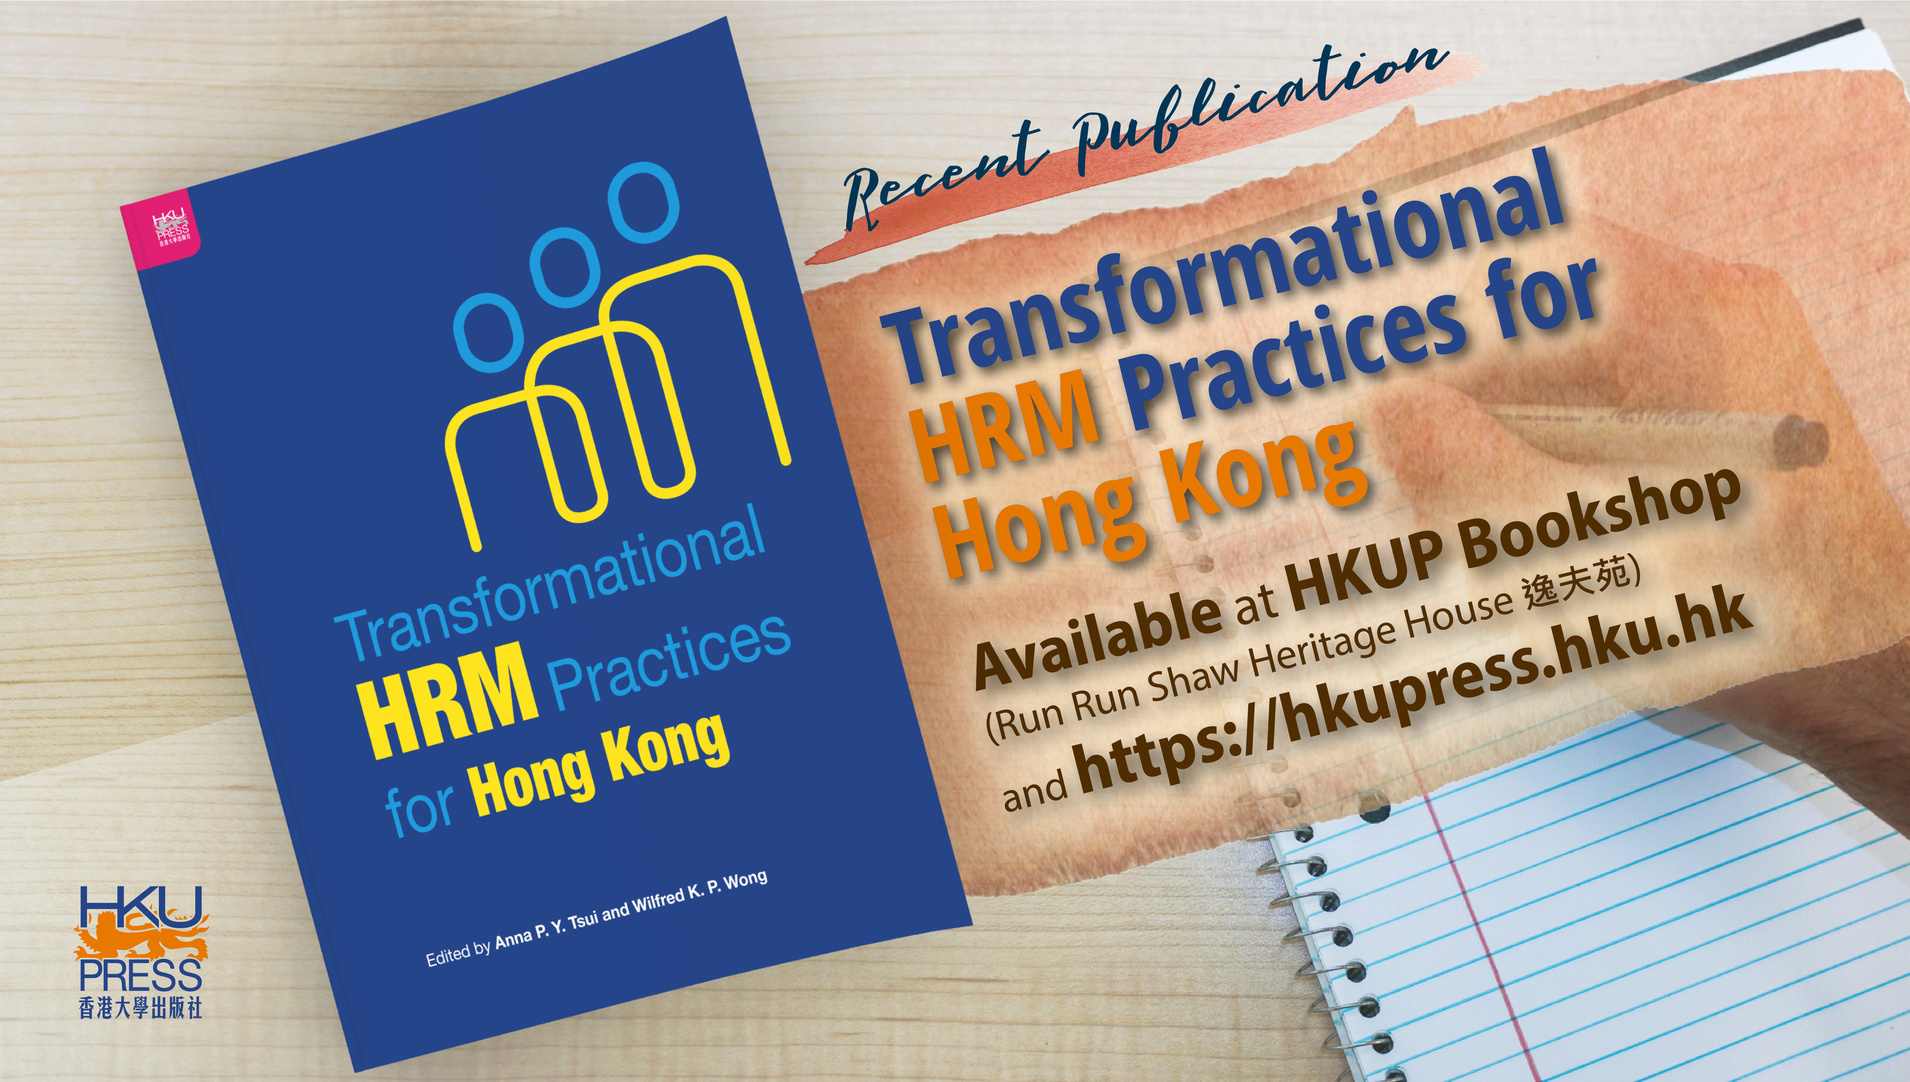 HKU Press - Recent Publication